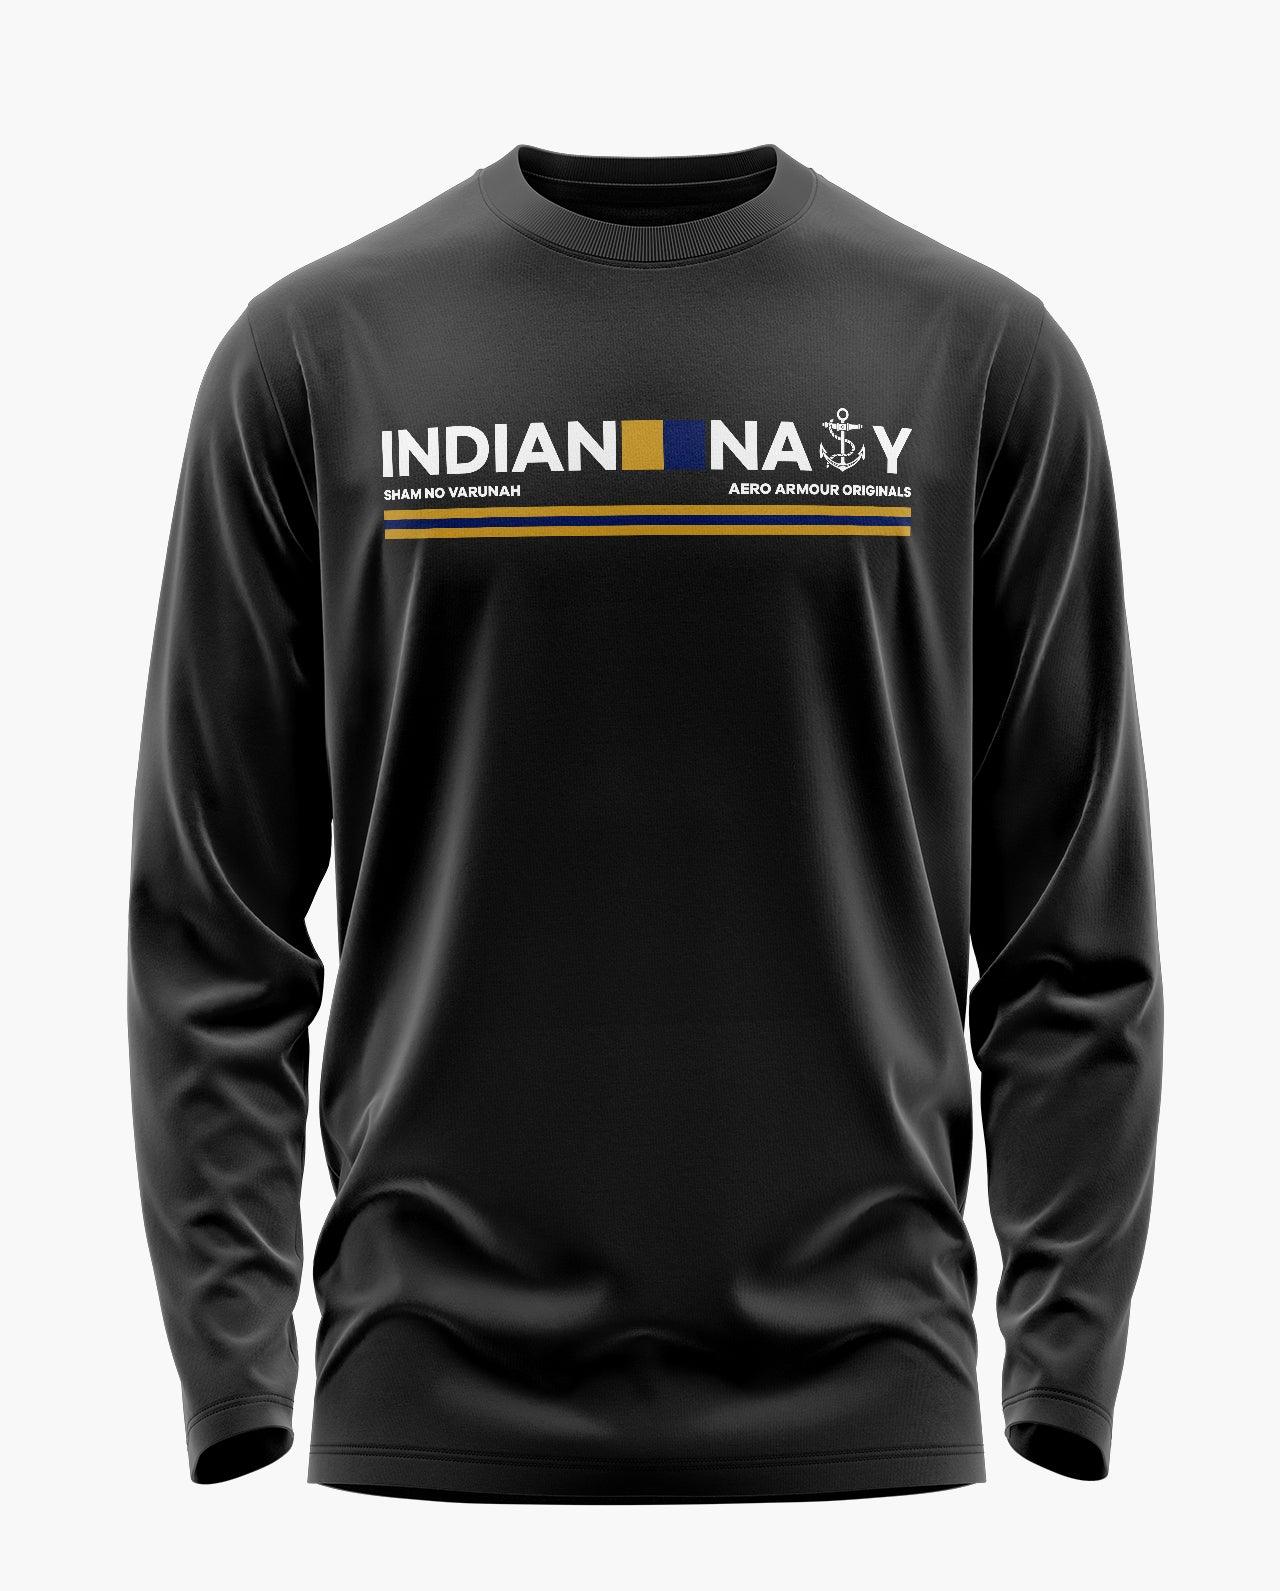 Indian Navy Admiral Full Sleeve T-Shirt - Aero Armour